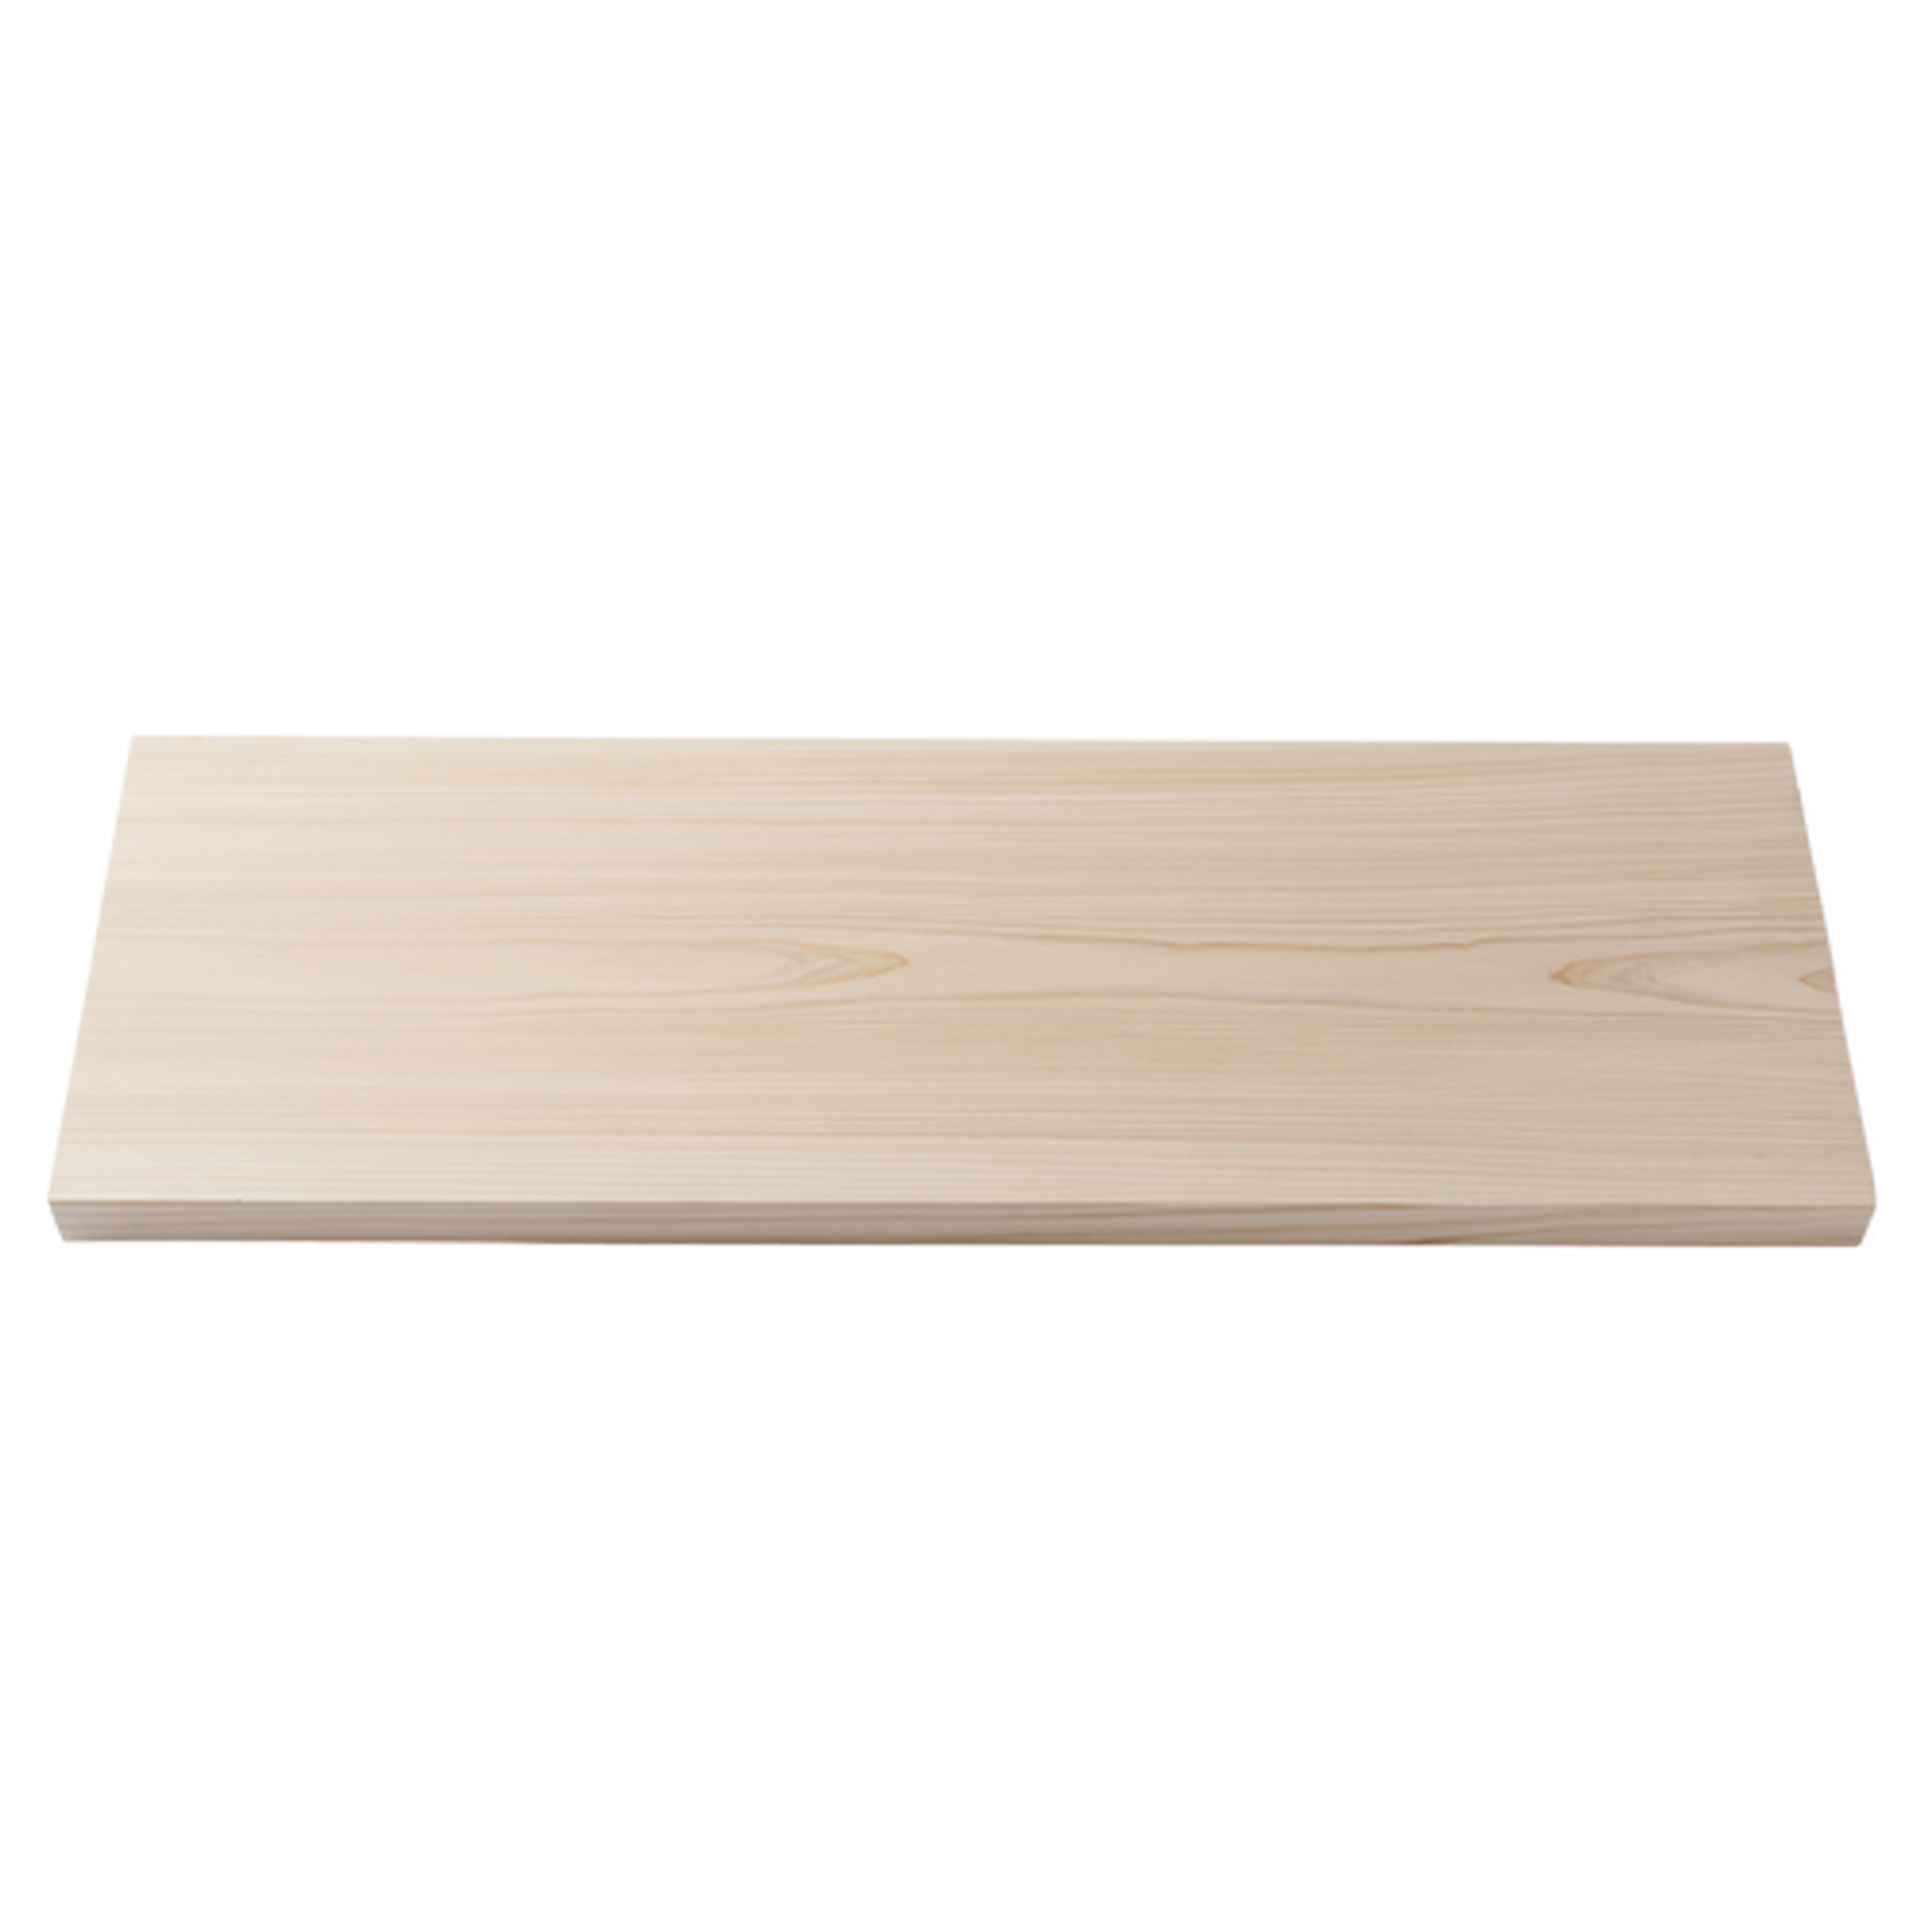 Yoshino cypress cutting board 1000 x 350 x 40 mm (sushi restaurant size 2)